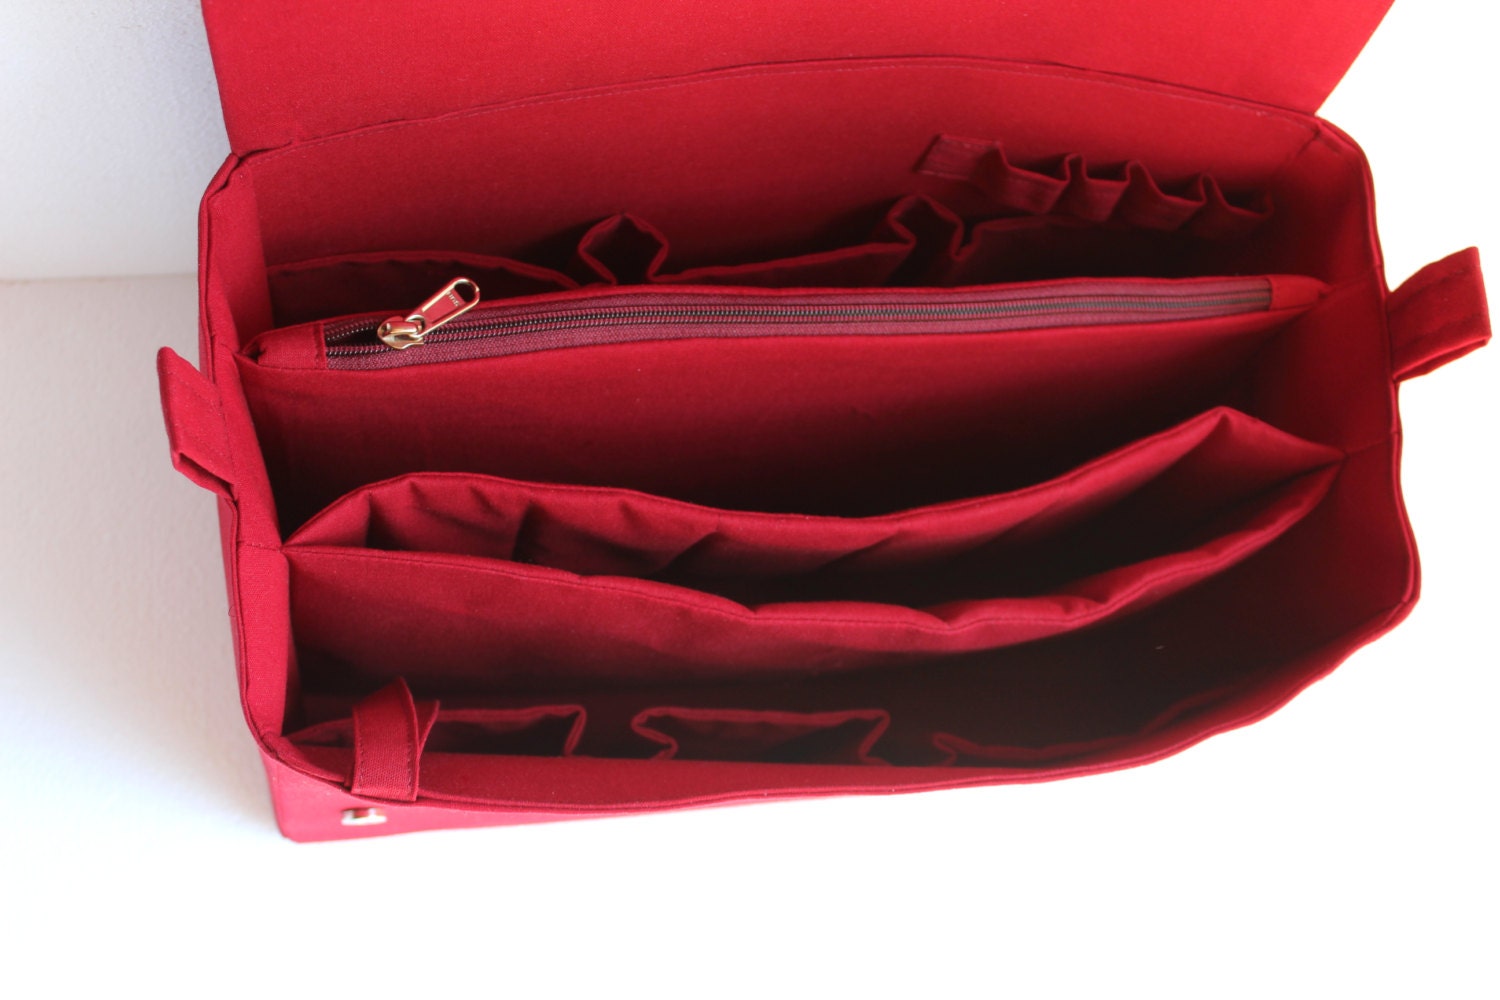 Extra Taller Bag Organizer for Louis Vuitton Neverfull Purse 